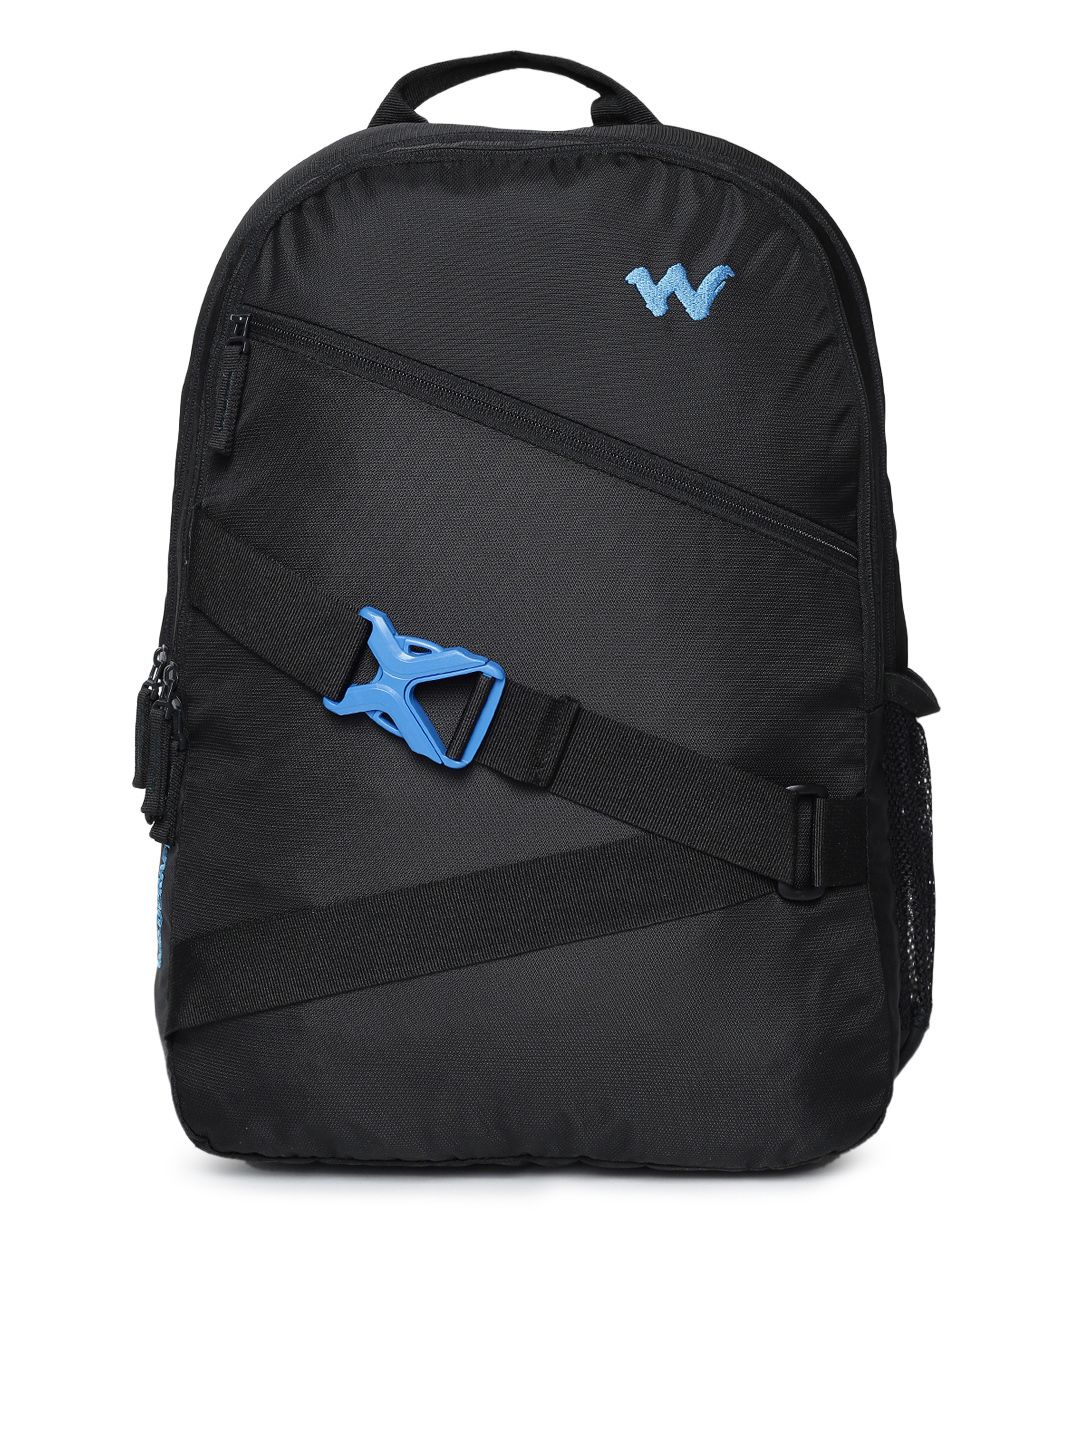 Wildcraft Unisex Black Solid Backpack Price in India